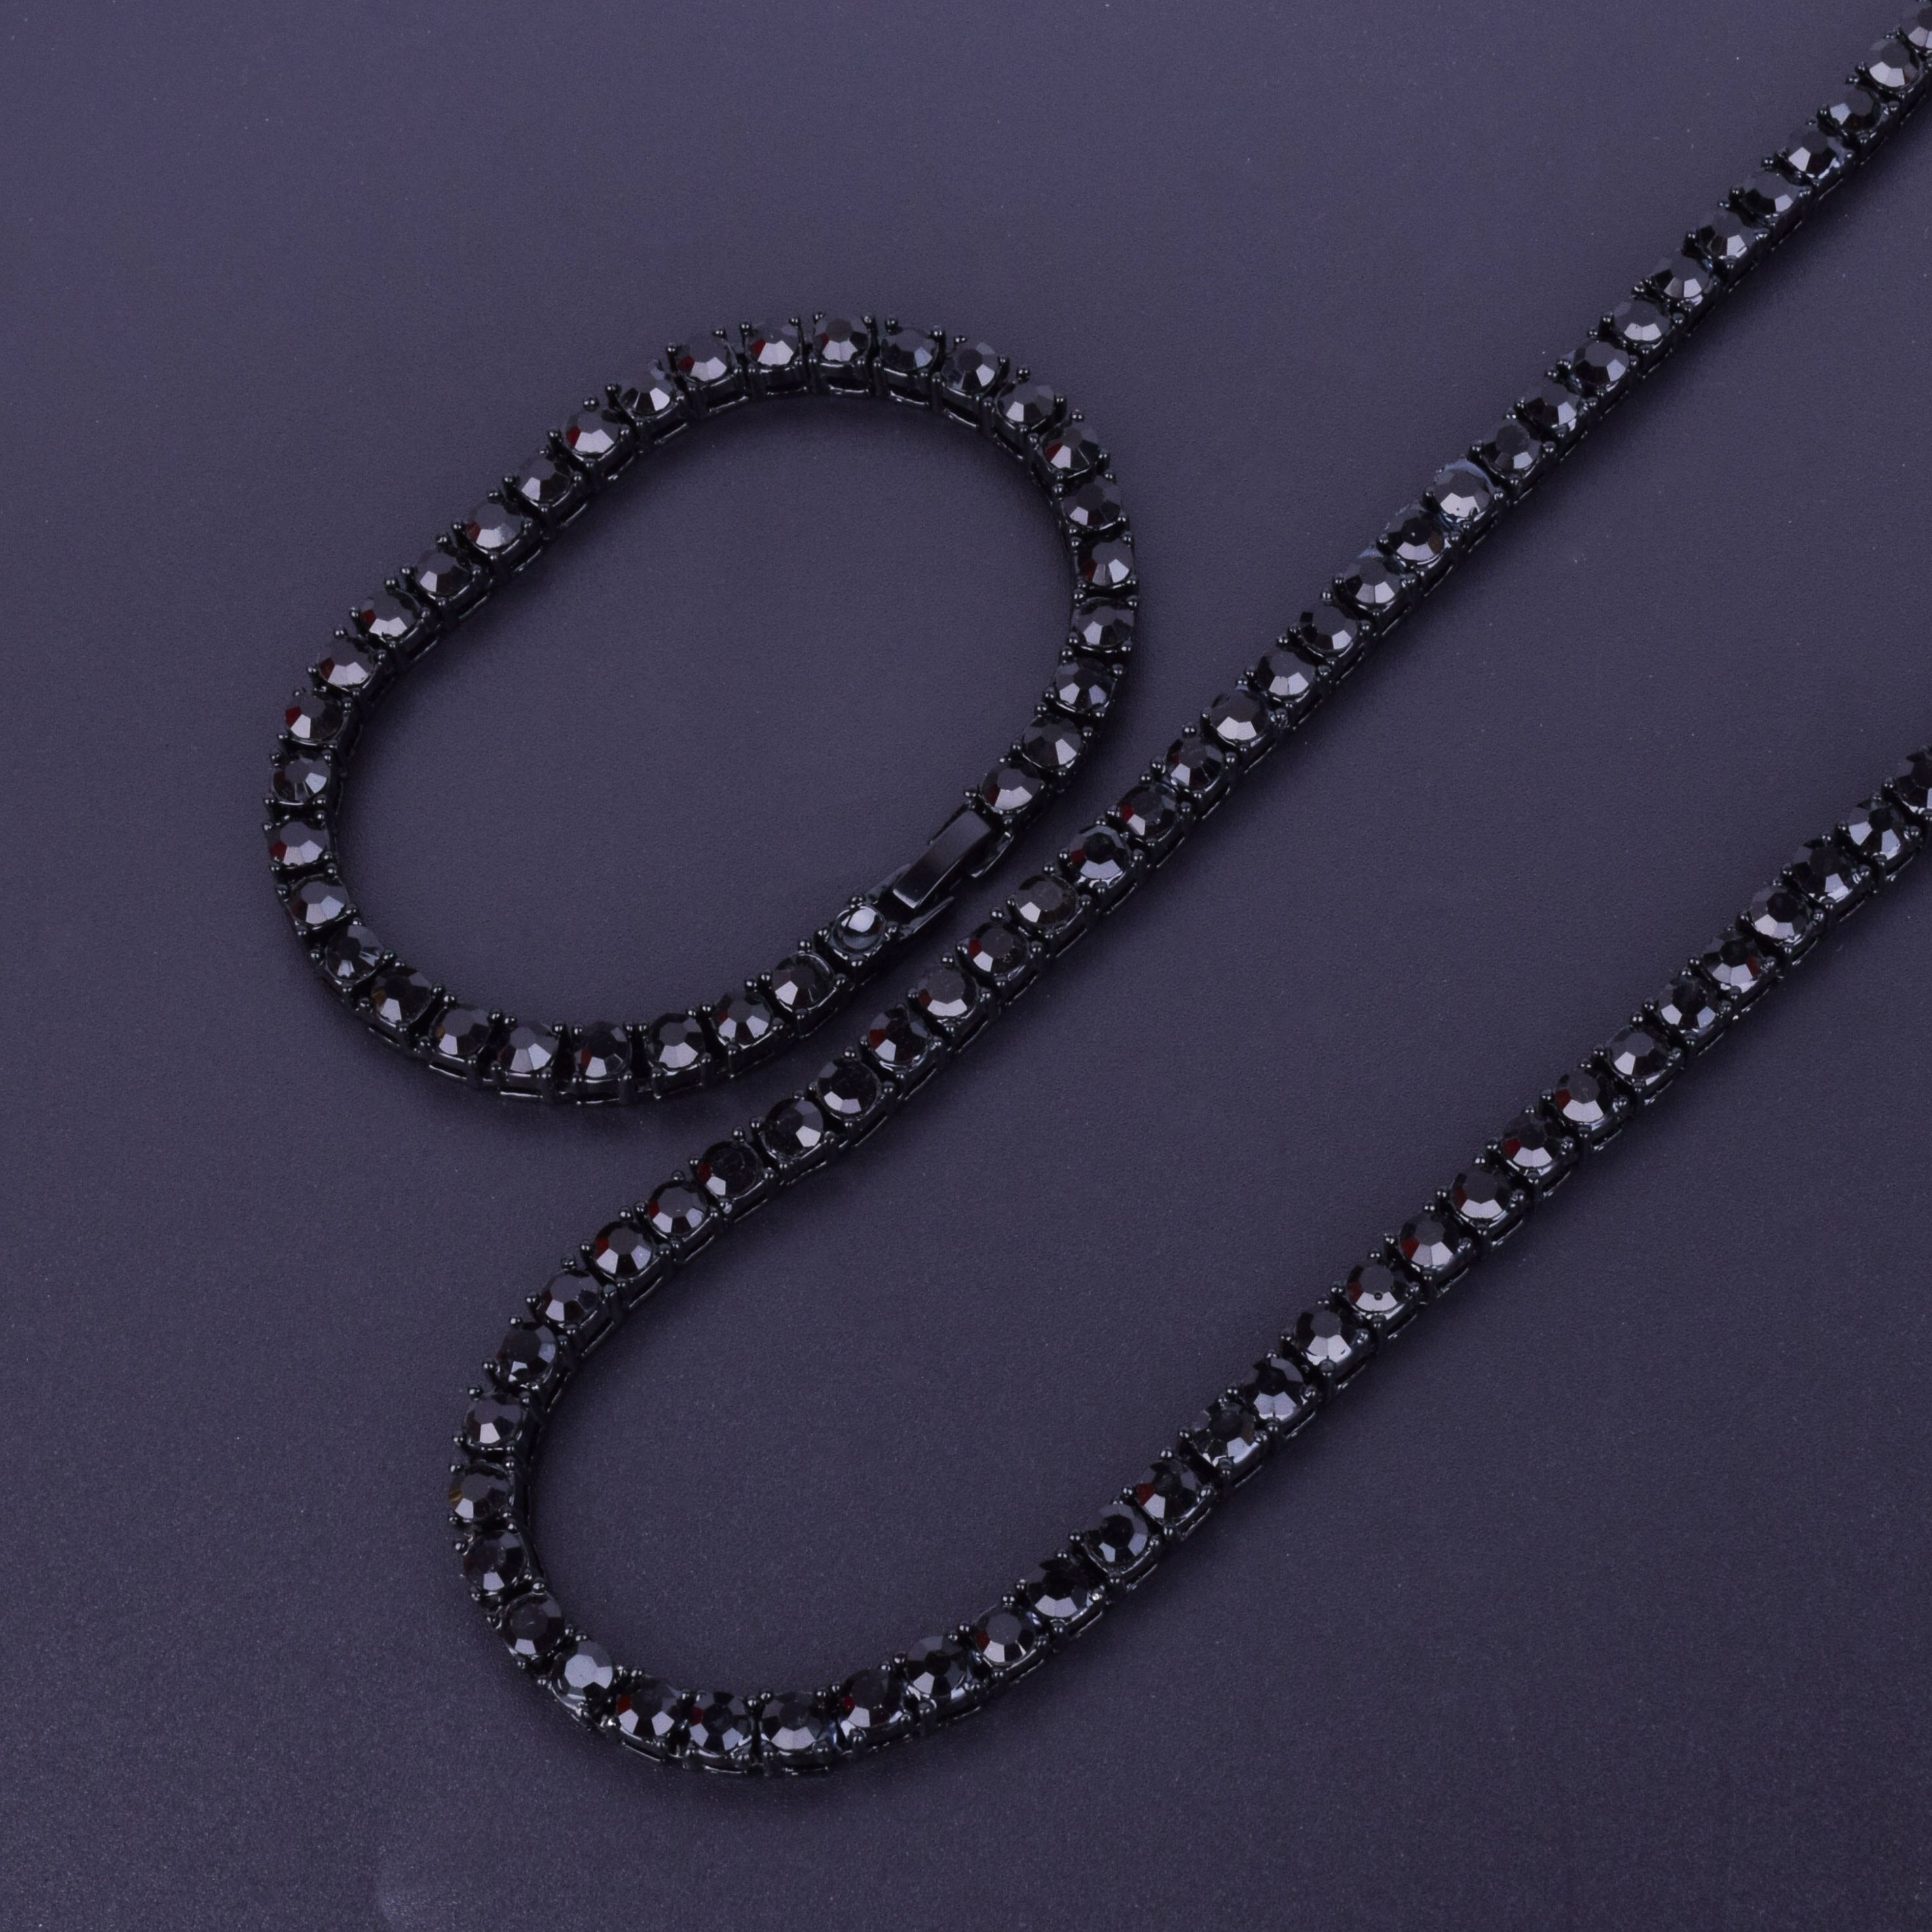 5mm Tennis Chain | Tennis Necklace | Tennis Bracelet